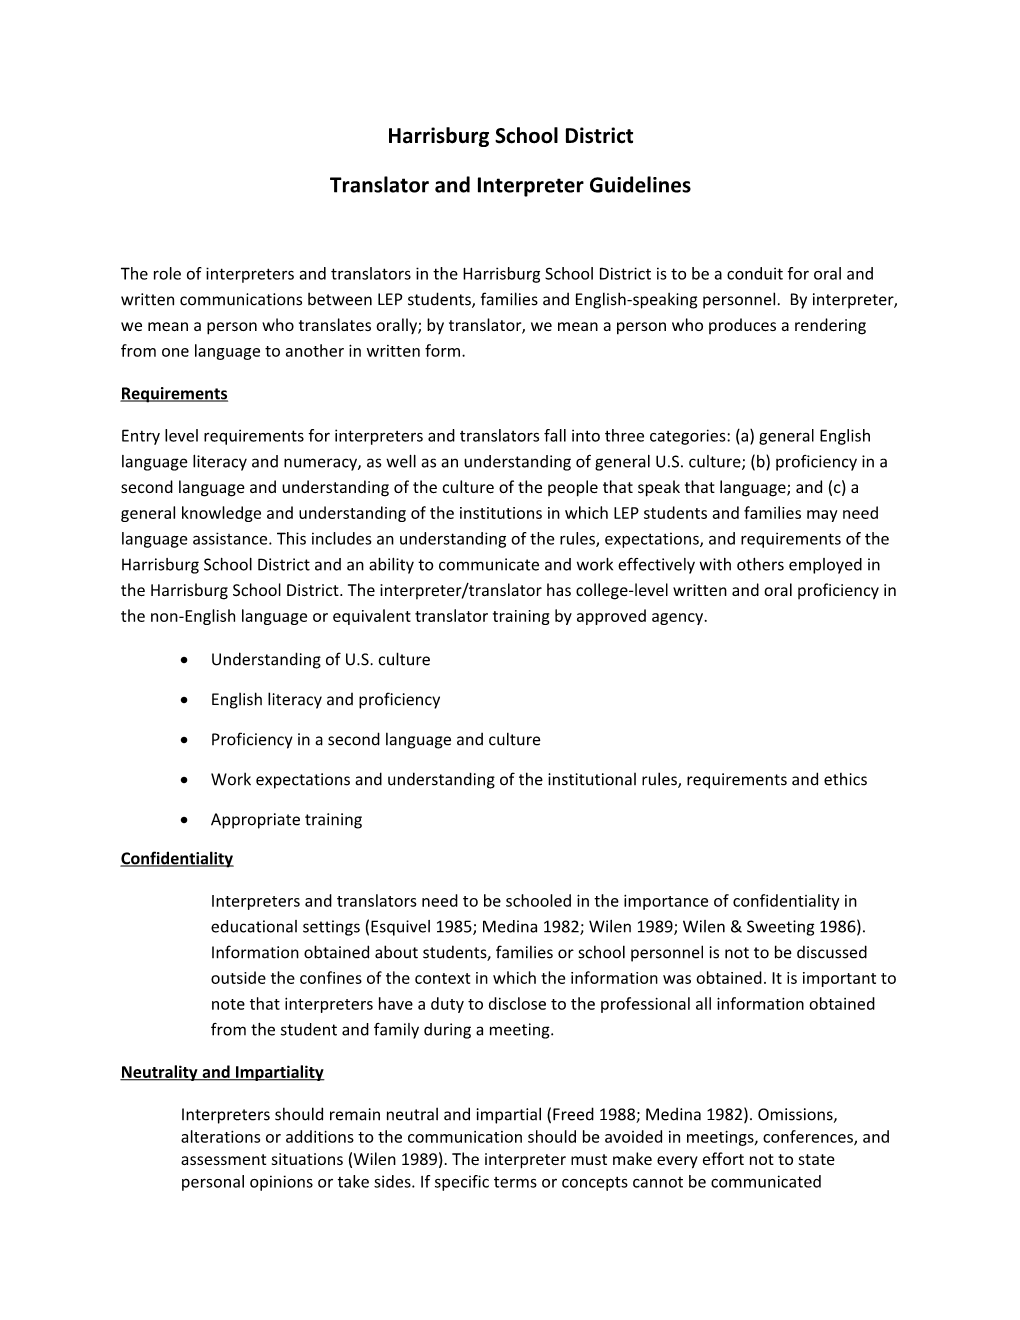 Translator and Interpreter Guidelines